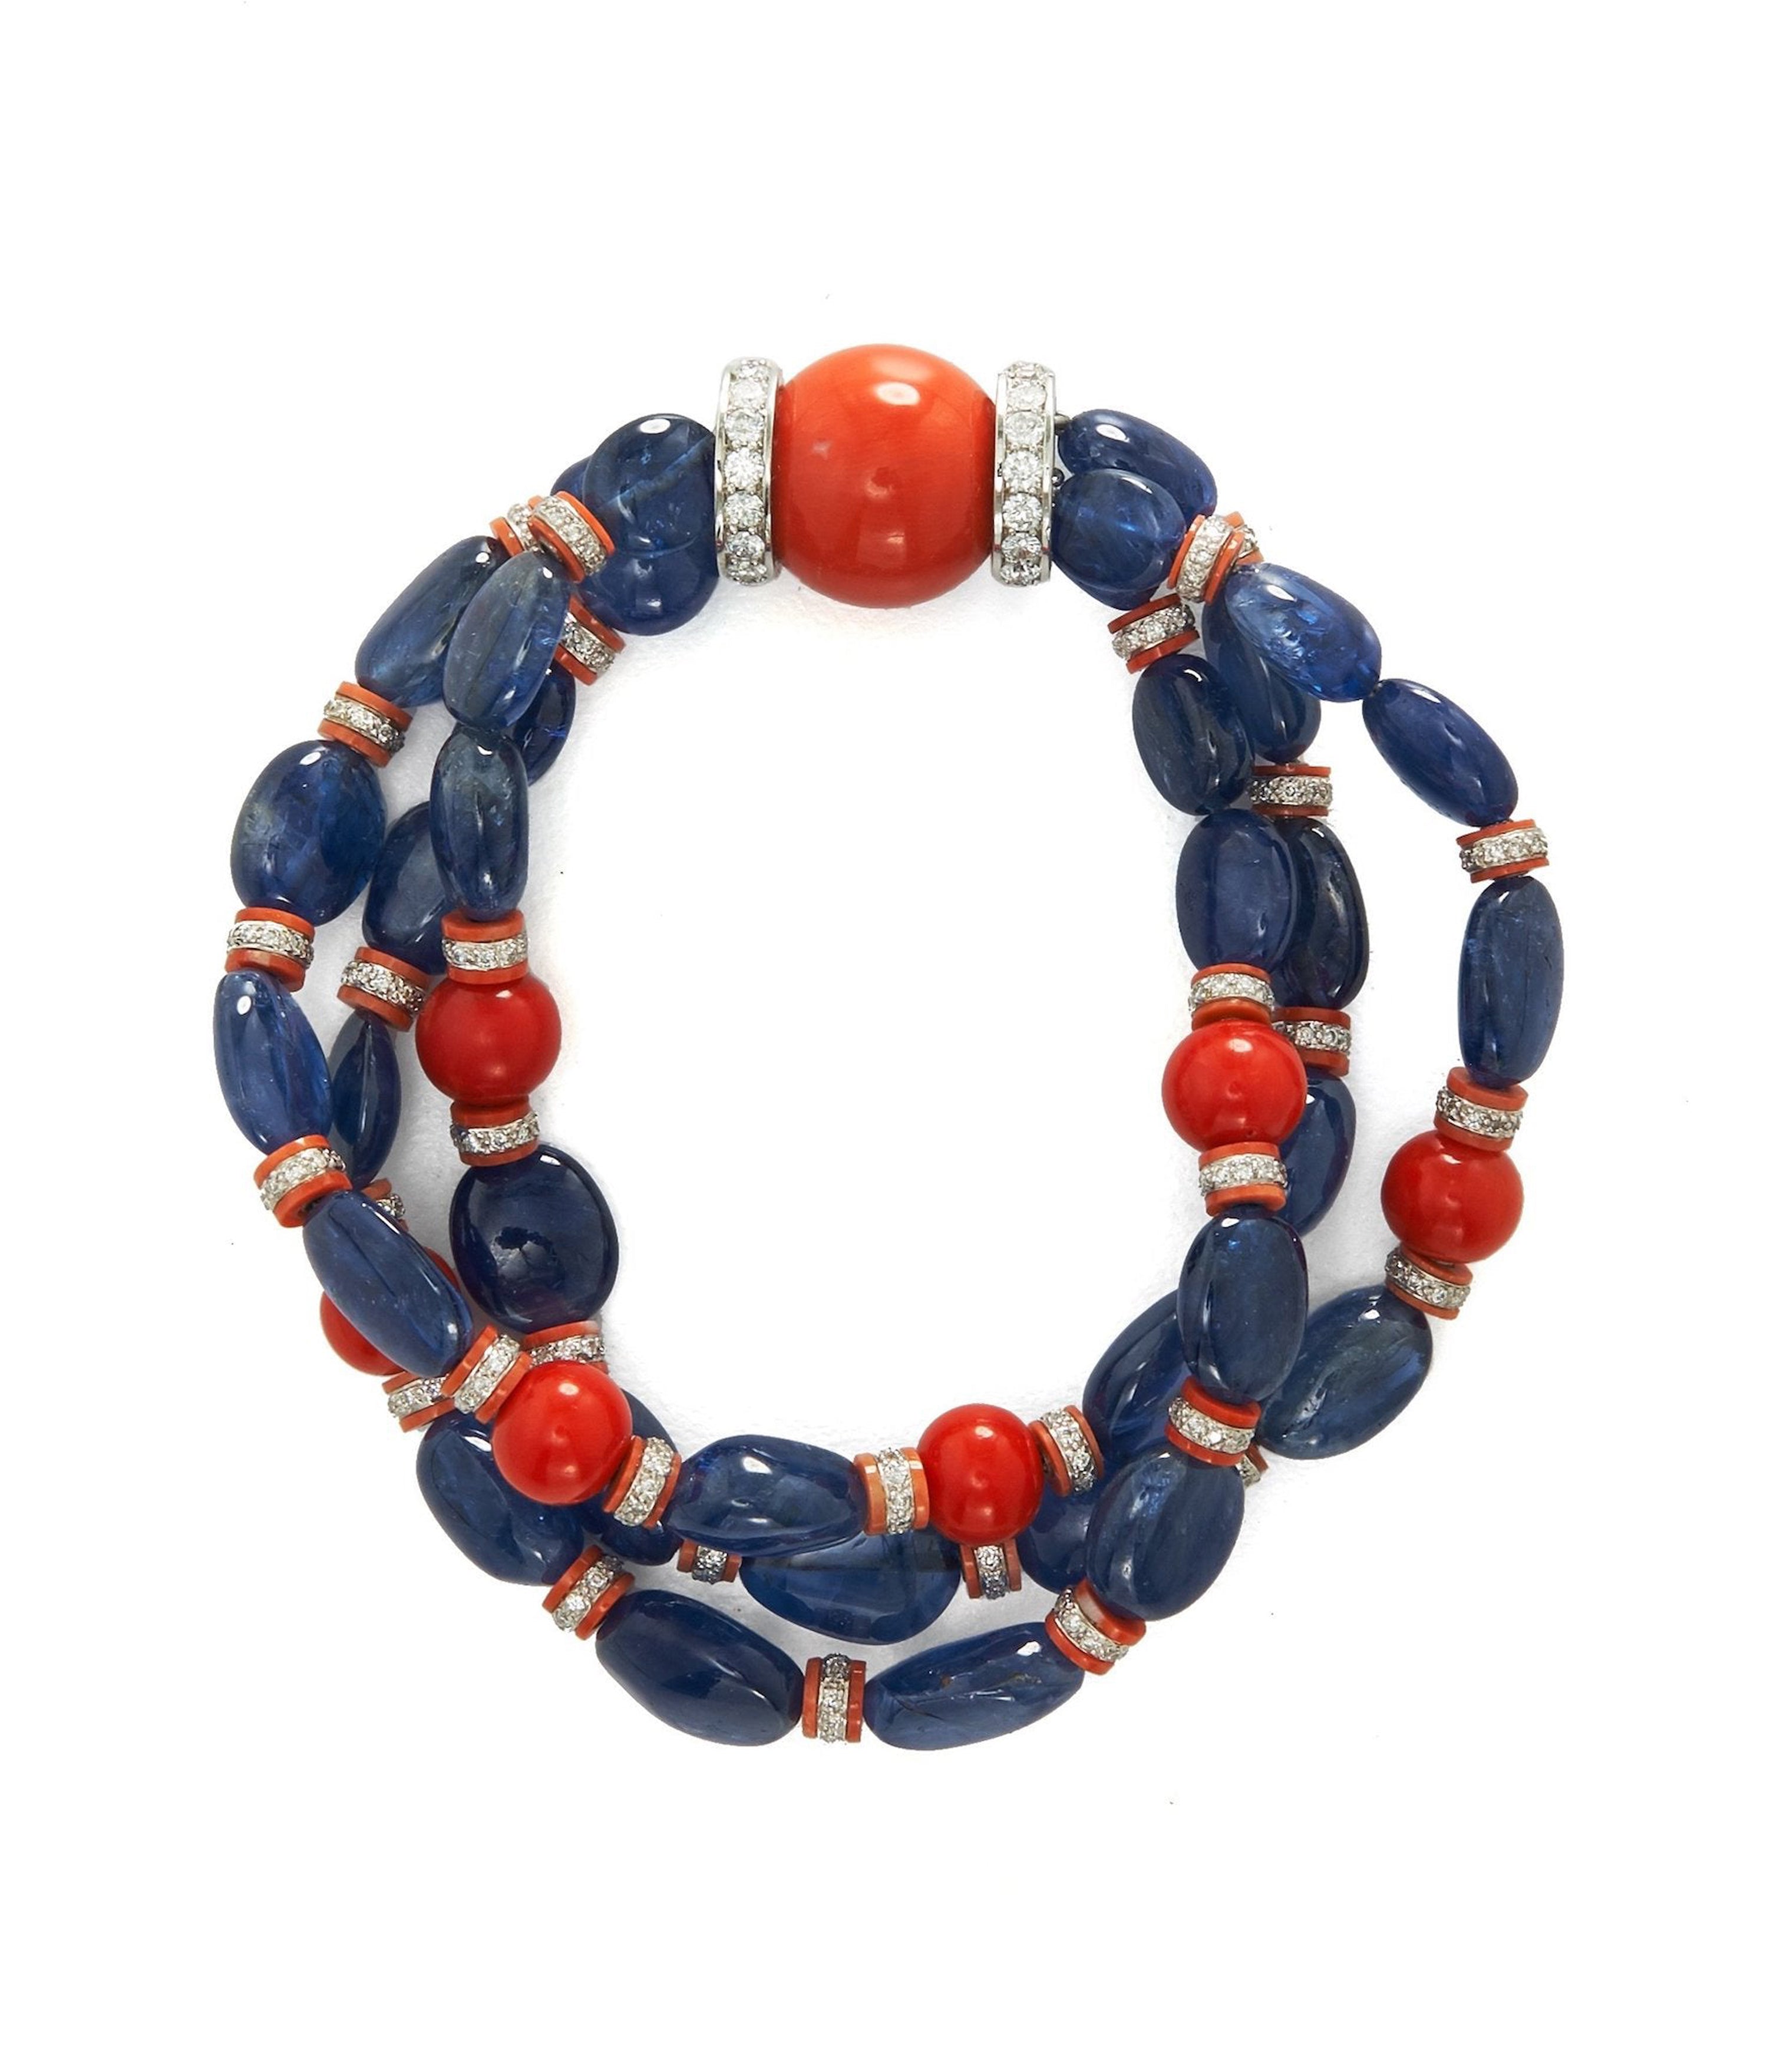 Coral Lava Bead Bracelet by MK Designs